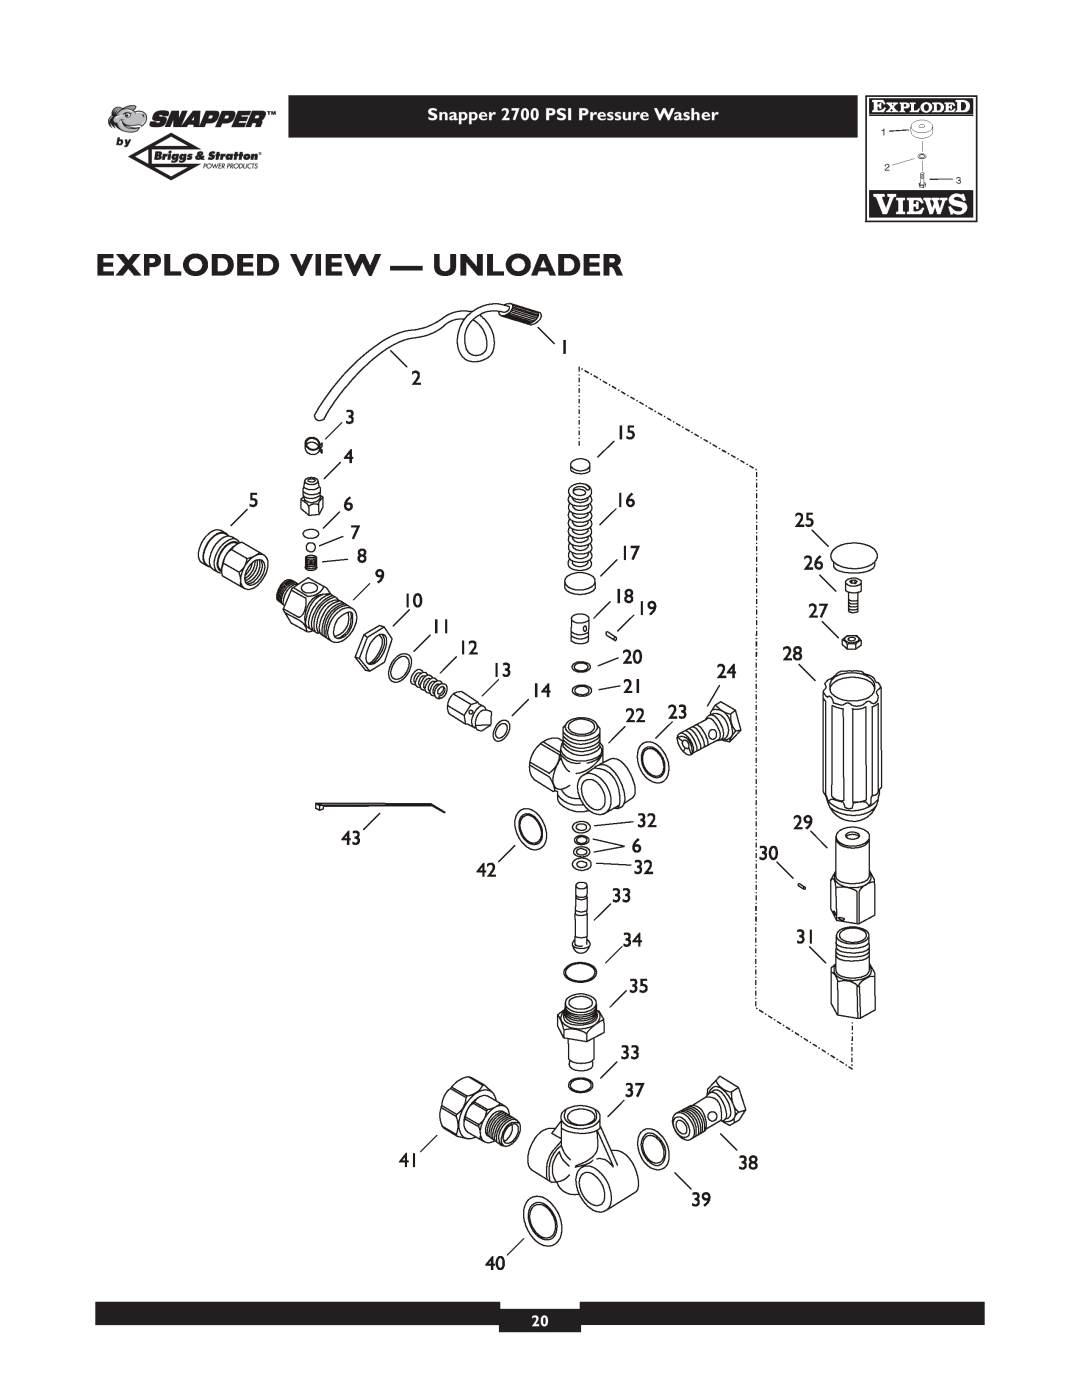 Snapper 1661-0 owner manual Exploded View - Unloader, Snapper 2700 PSI Pressure Washer 